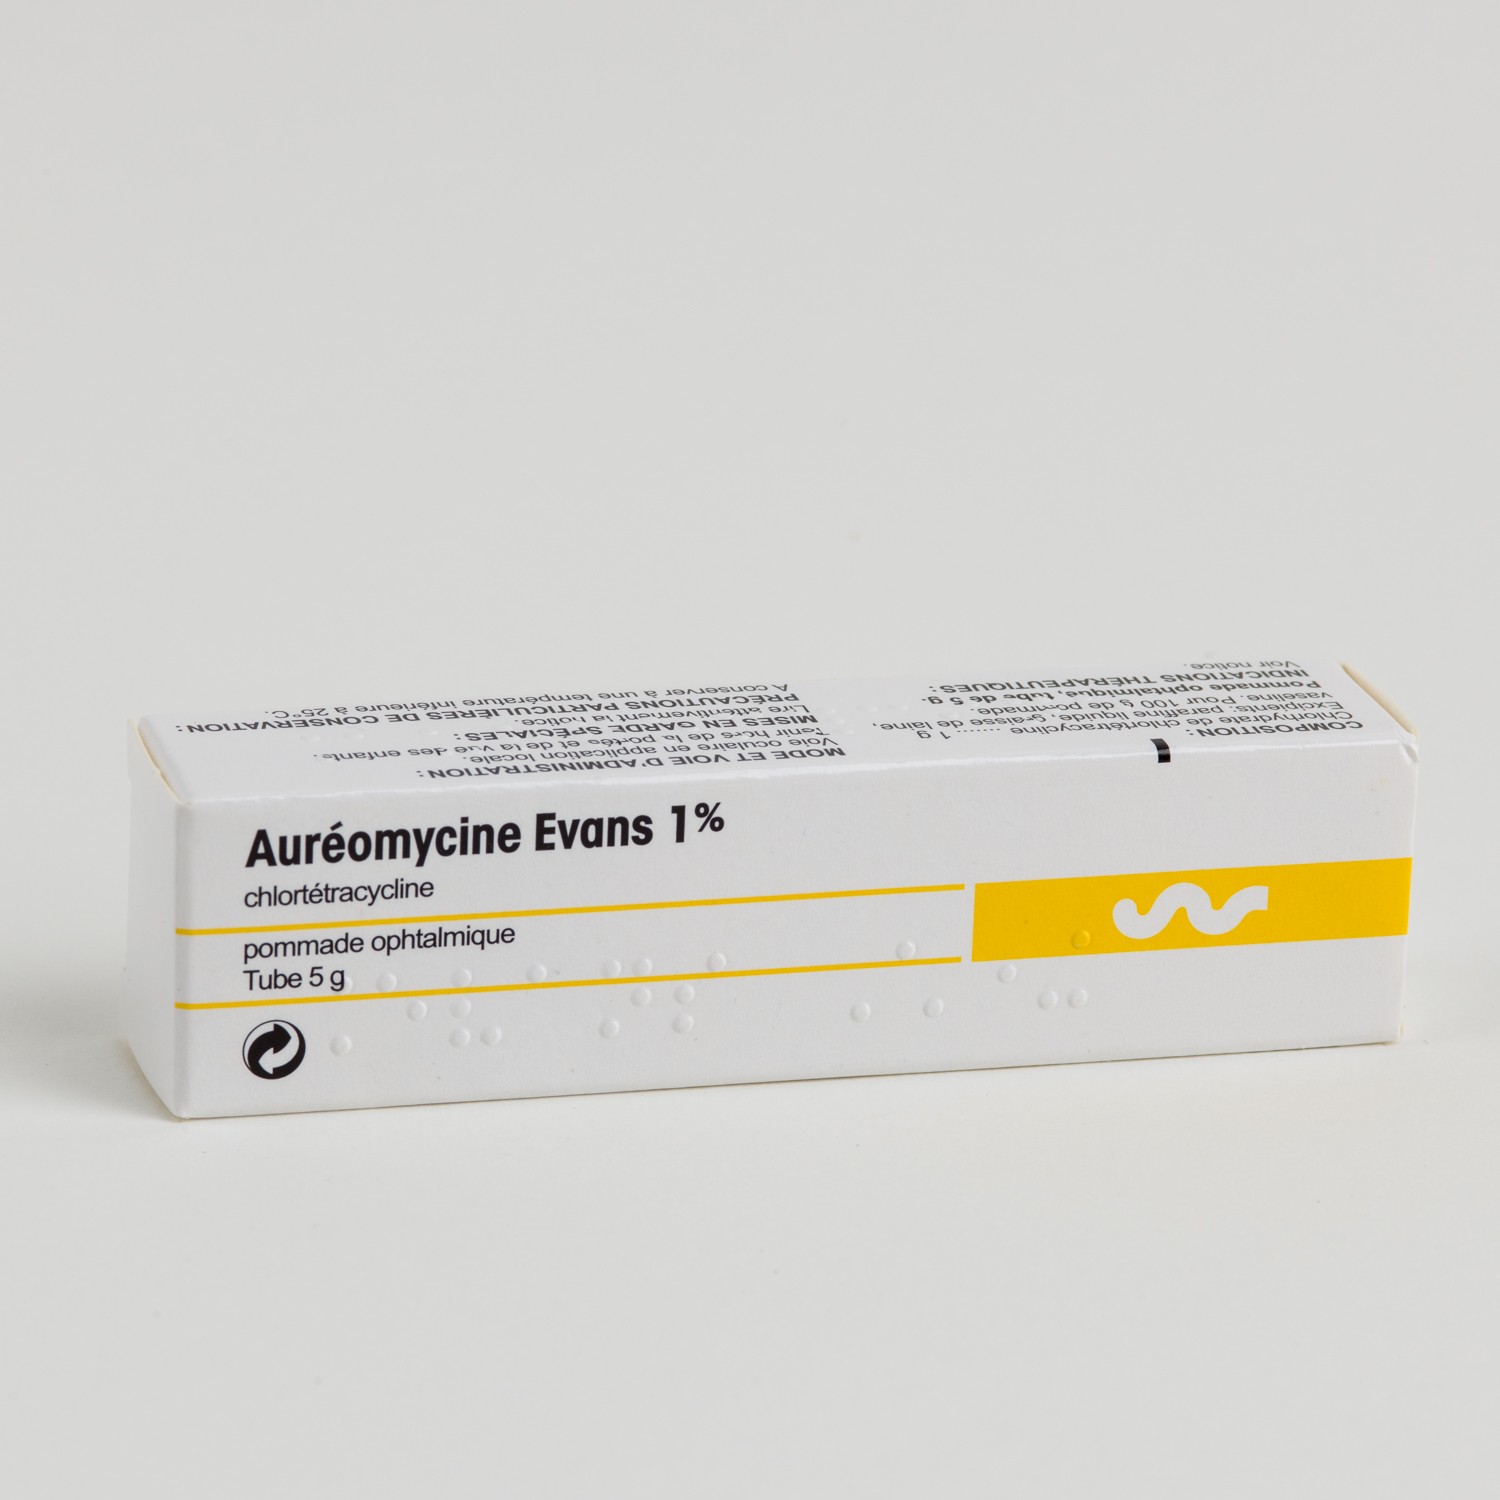 aureomycine-evans-1